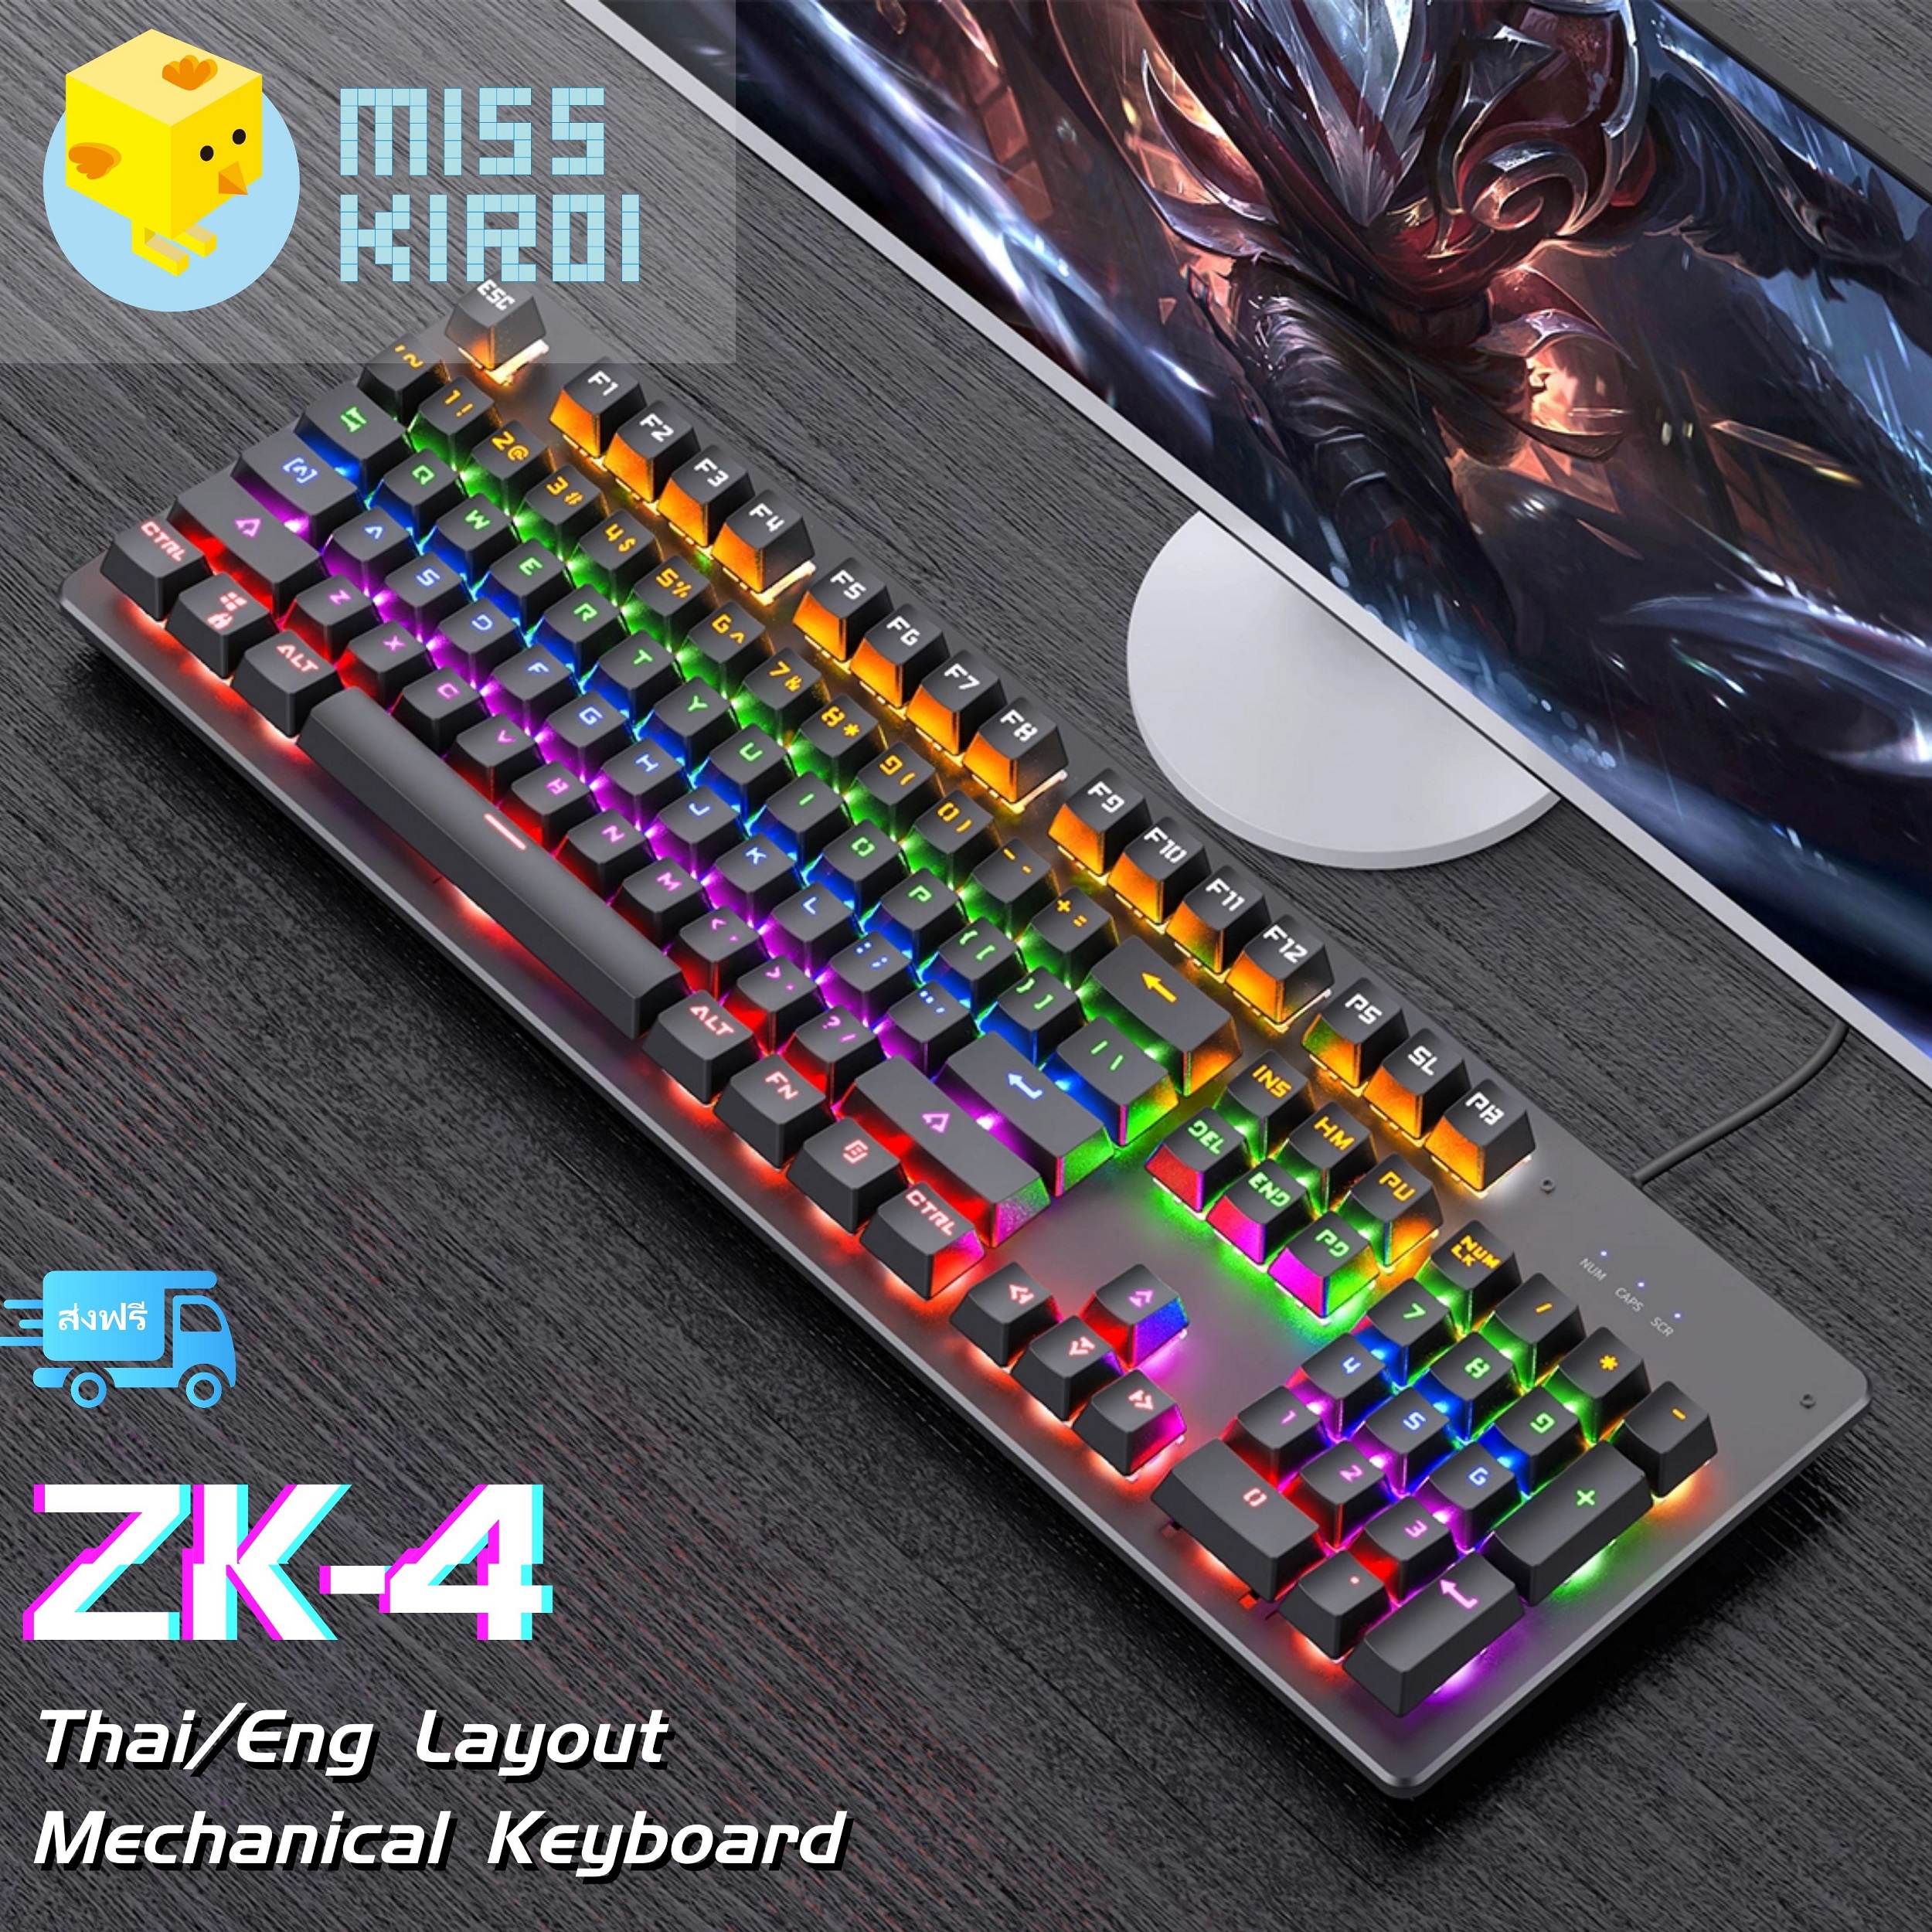 [Professional]  Thai/Eng คีย์บอร์ดเกมมิ่ง ZK-4 USB คีย์บอร์ด LED คีย์บอร์ด USB Wiring Mechanical Keyboard LED E-sport Backlight Gaming Keyboard  For PC Computer Gamer  LOL PUBG DOTA